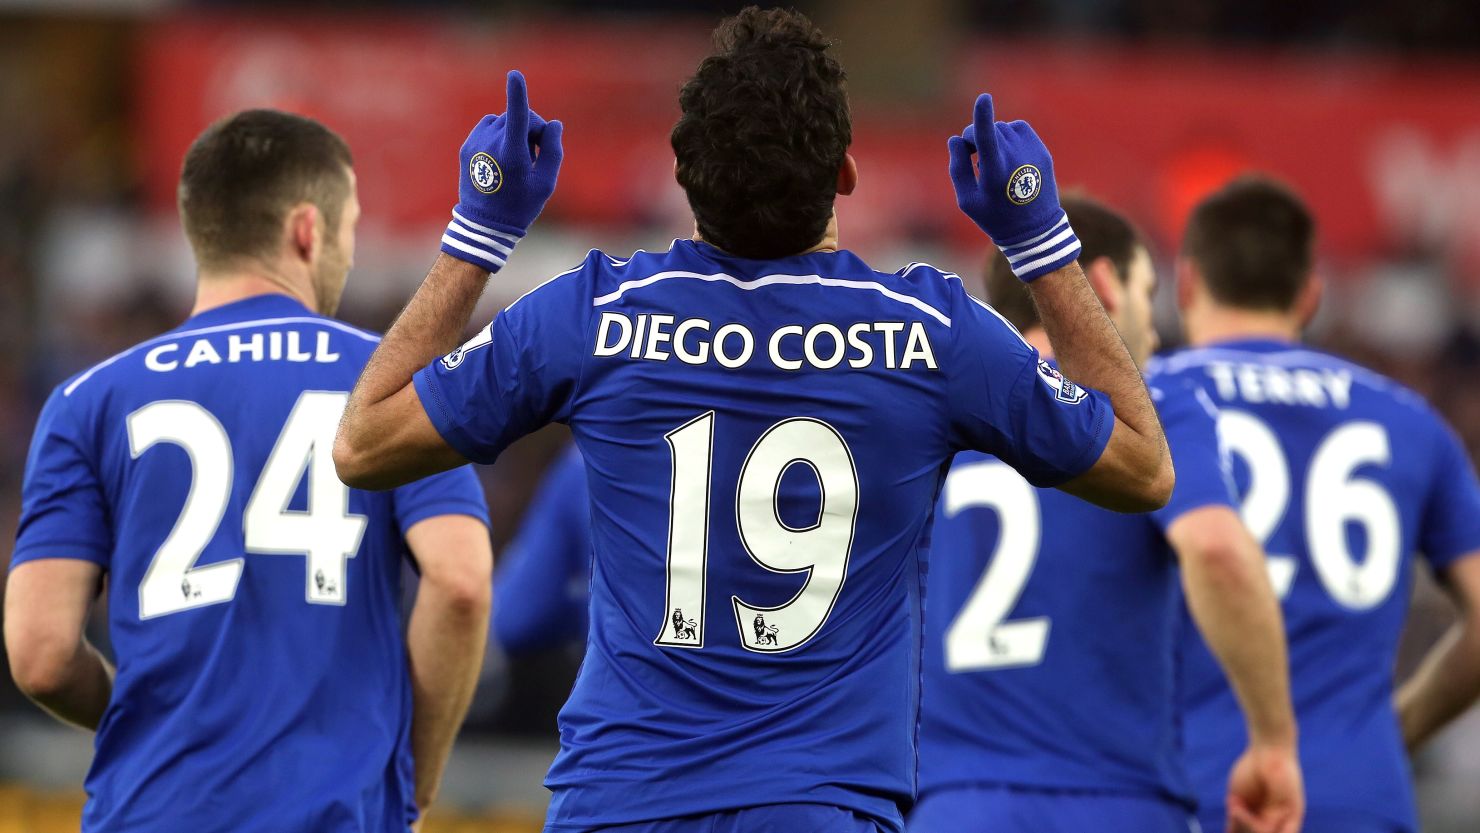 Chelsea's Brazilian-born Spanish striker Diego Costa scored twice against Swansea